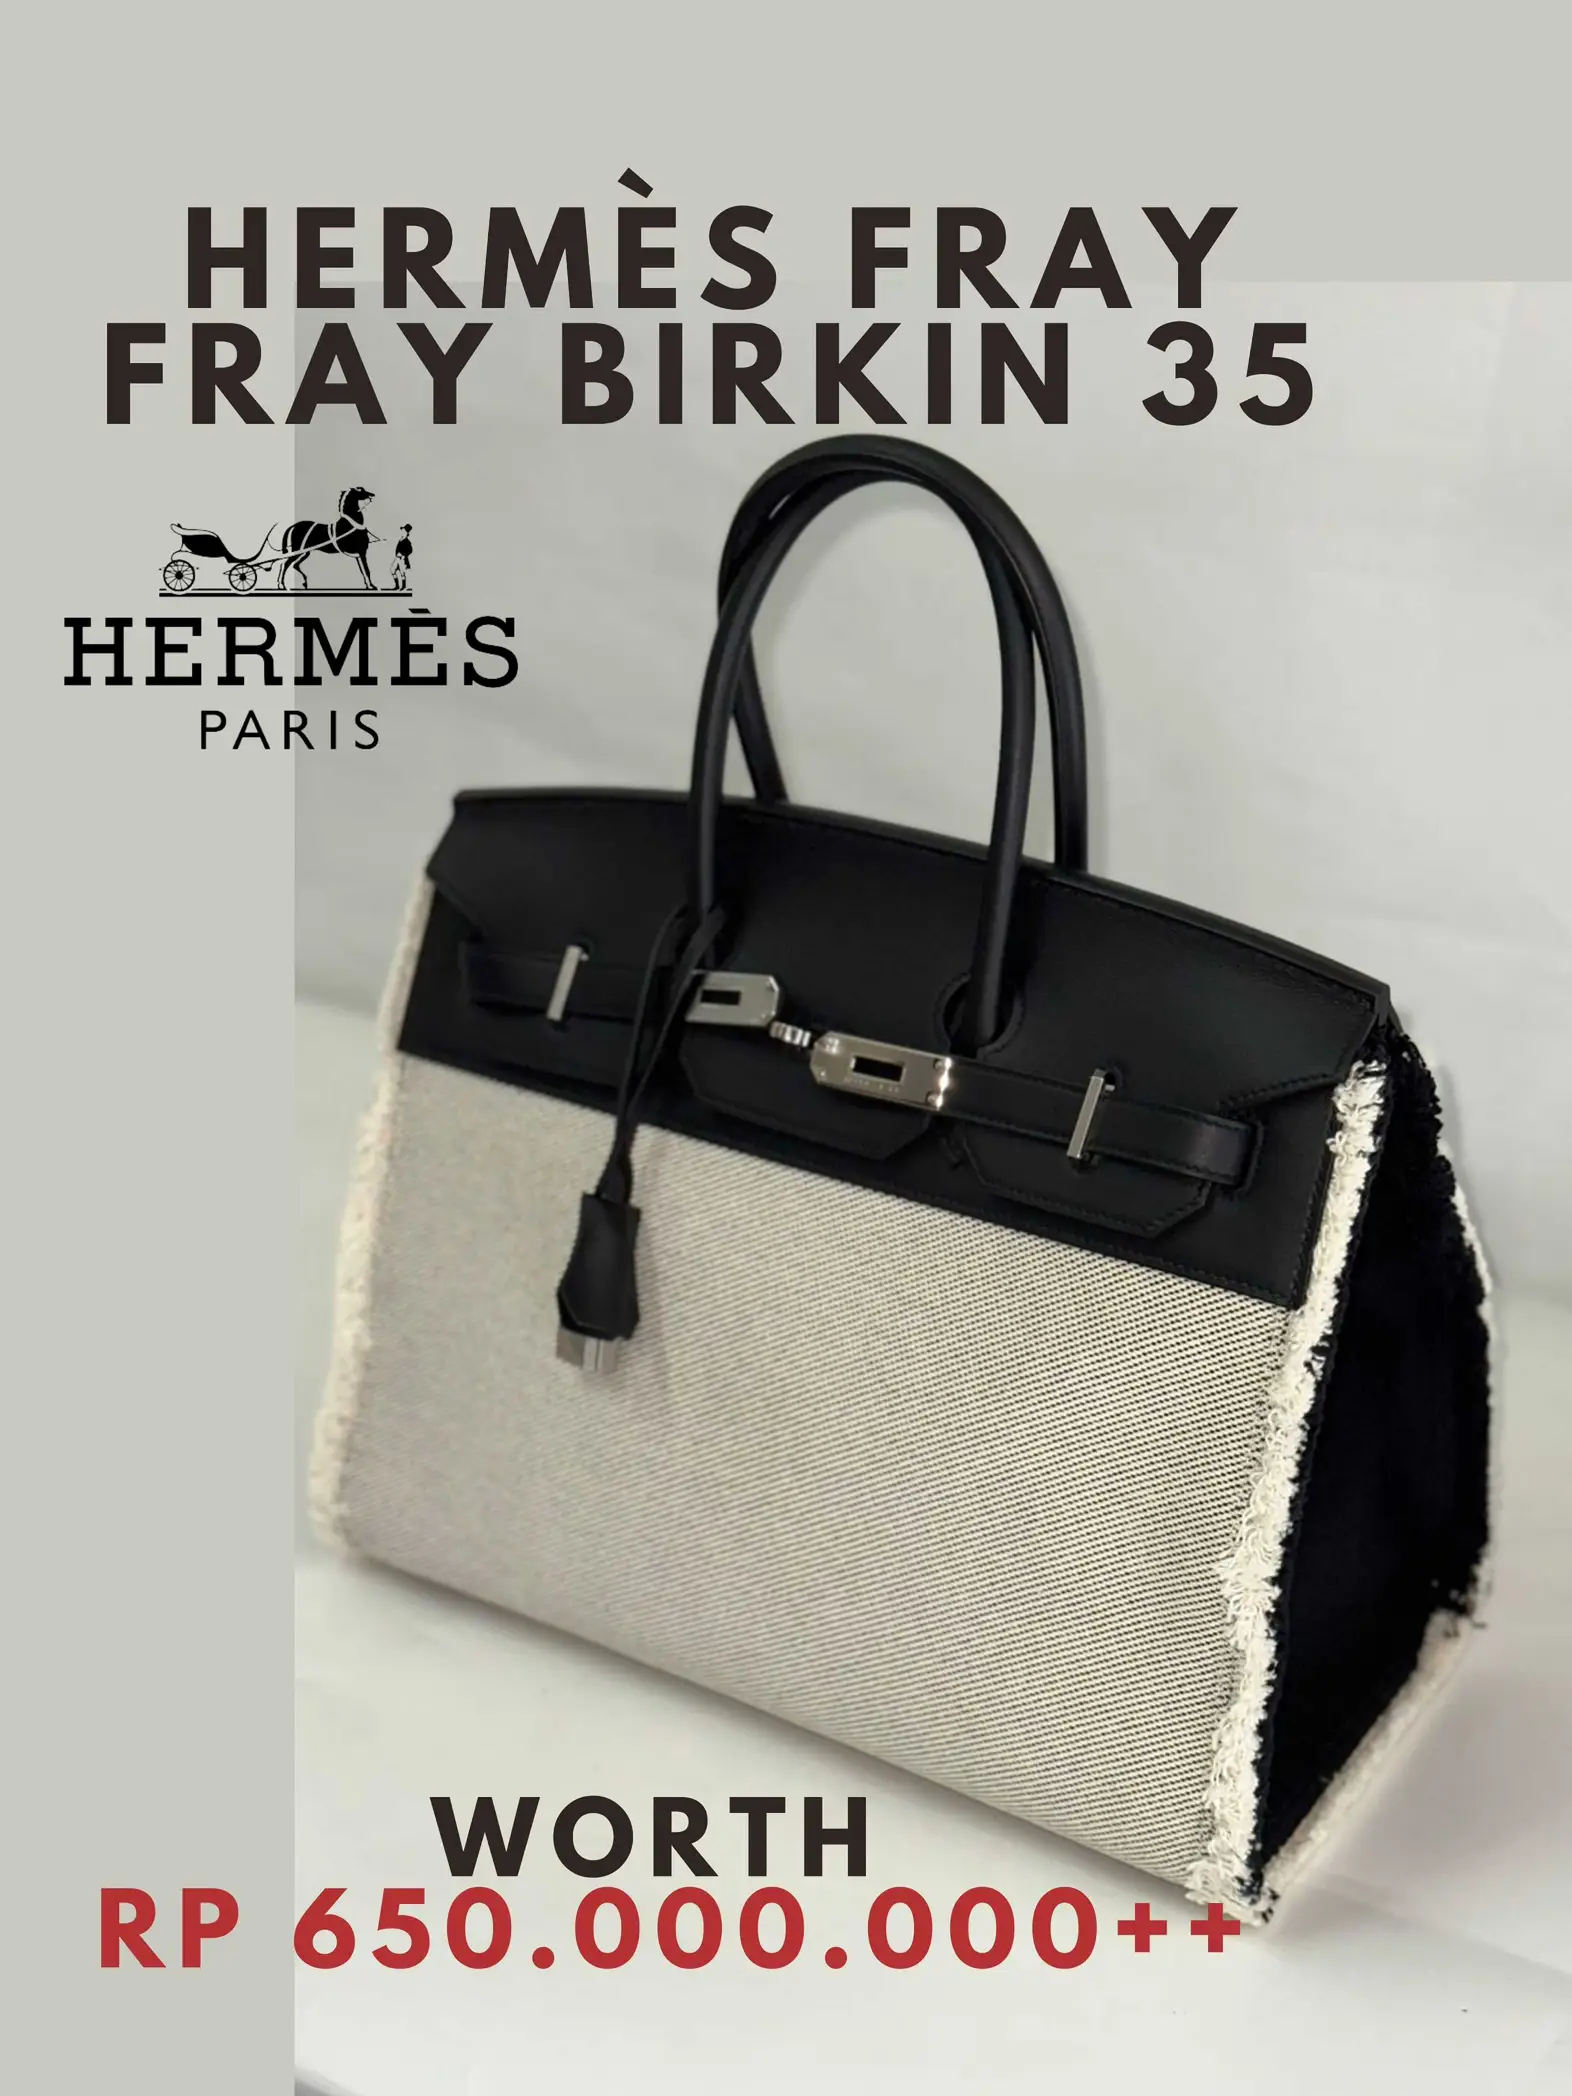 Hermes Birkin Fray 35